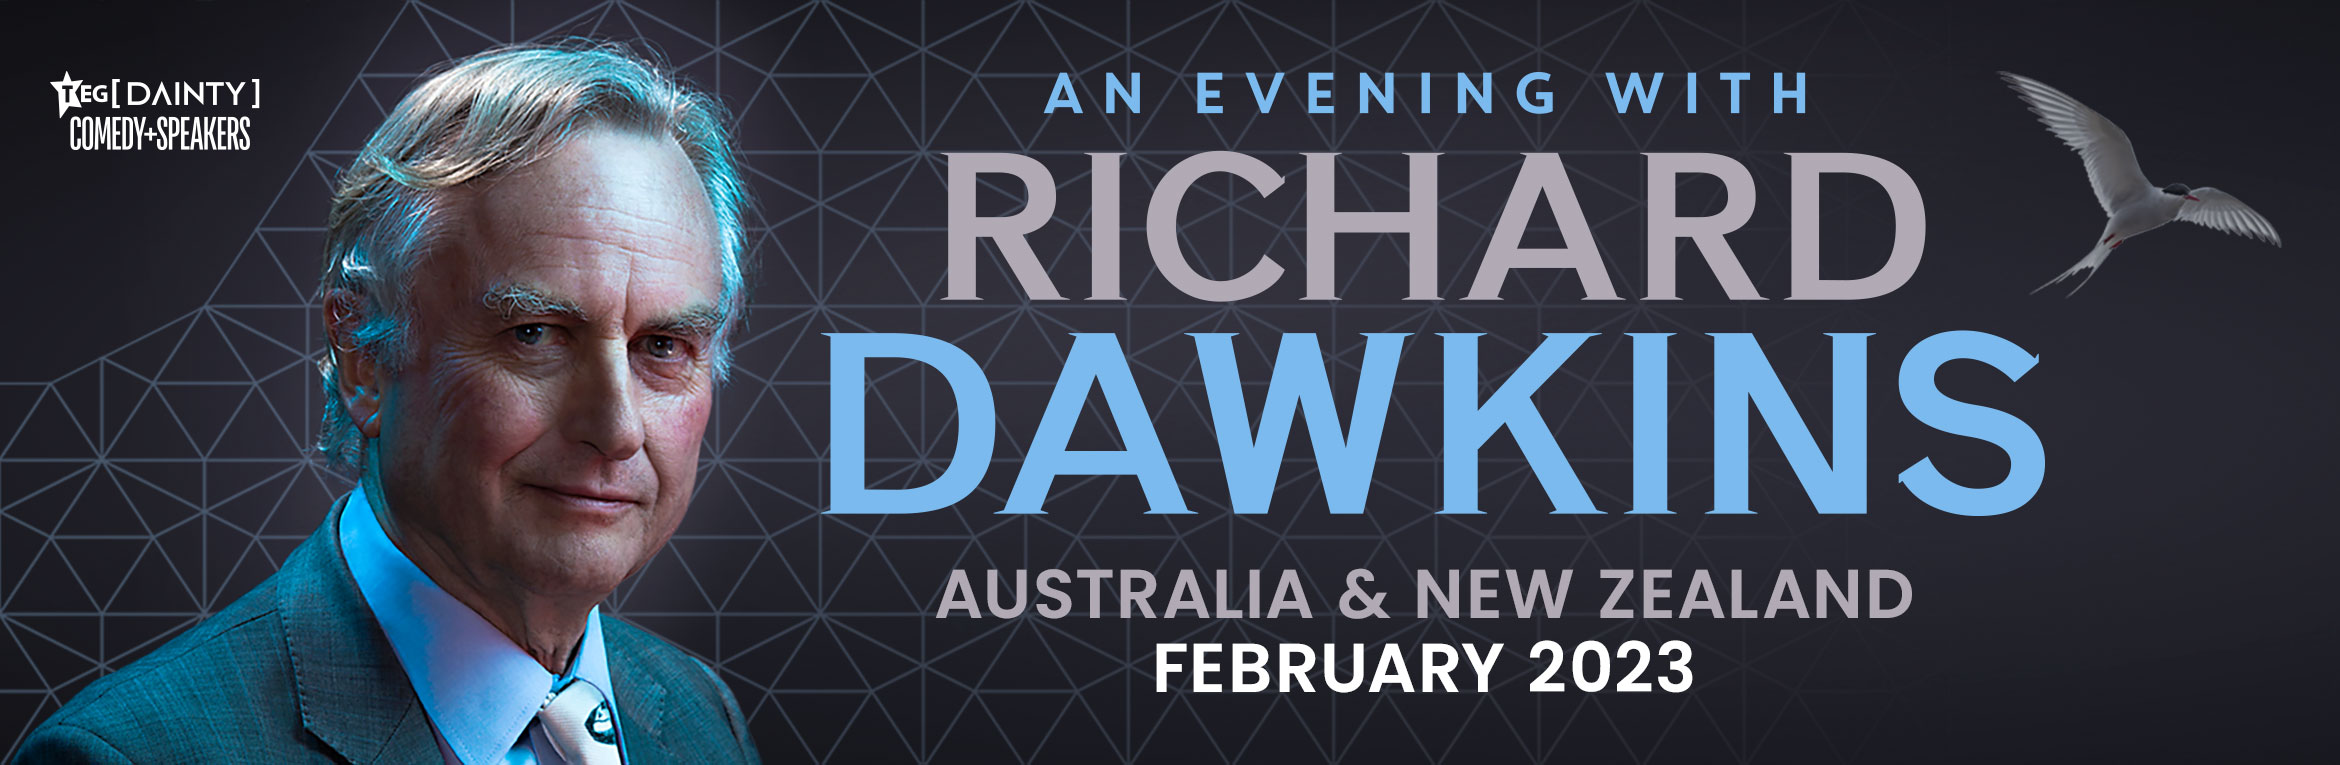 richard dawkins australian tour